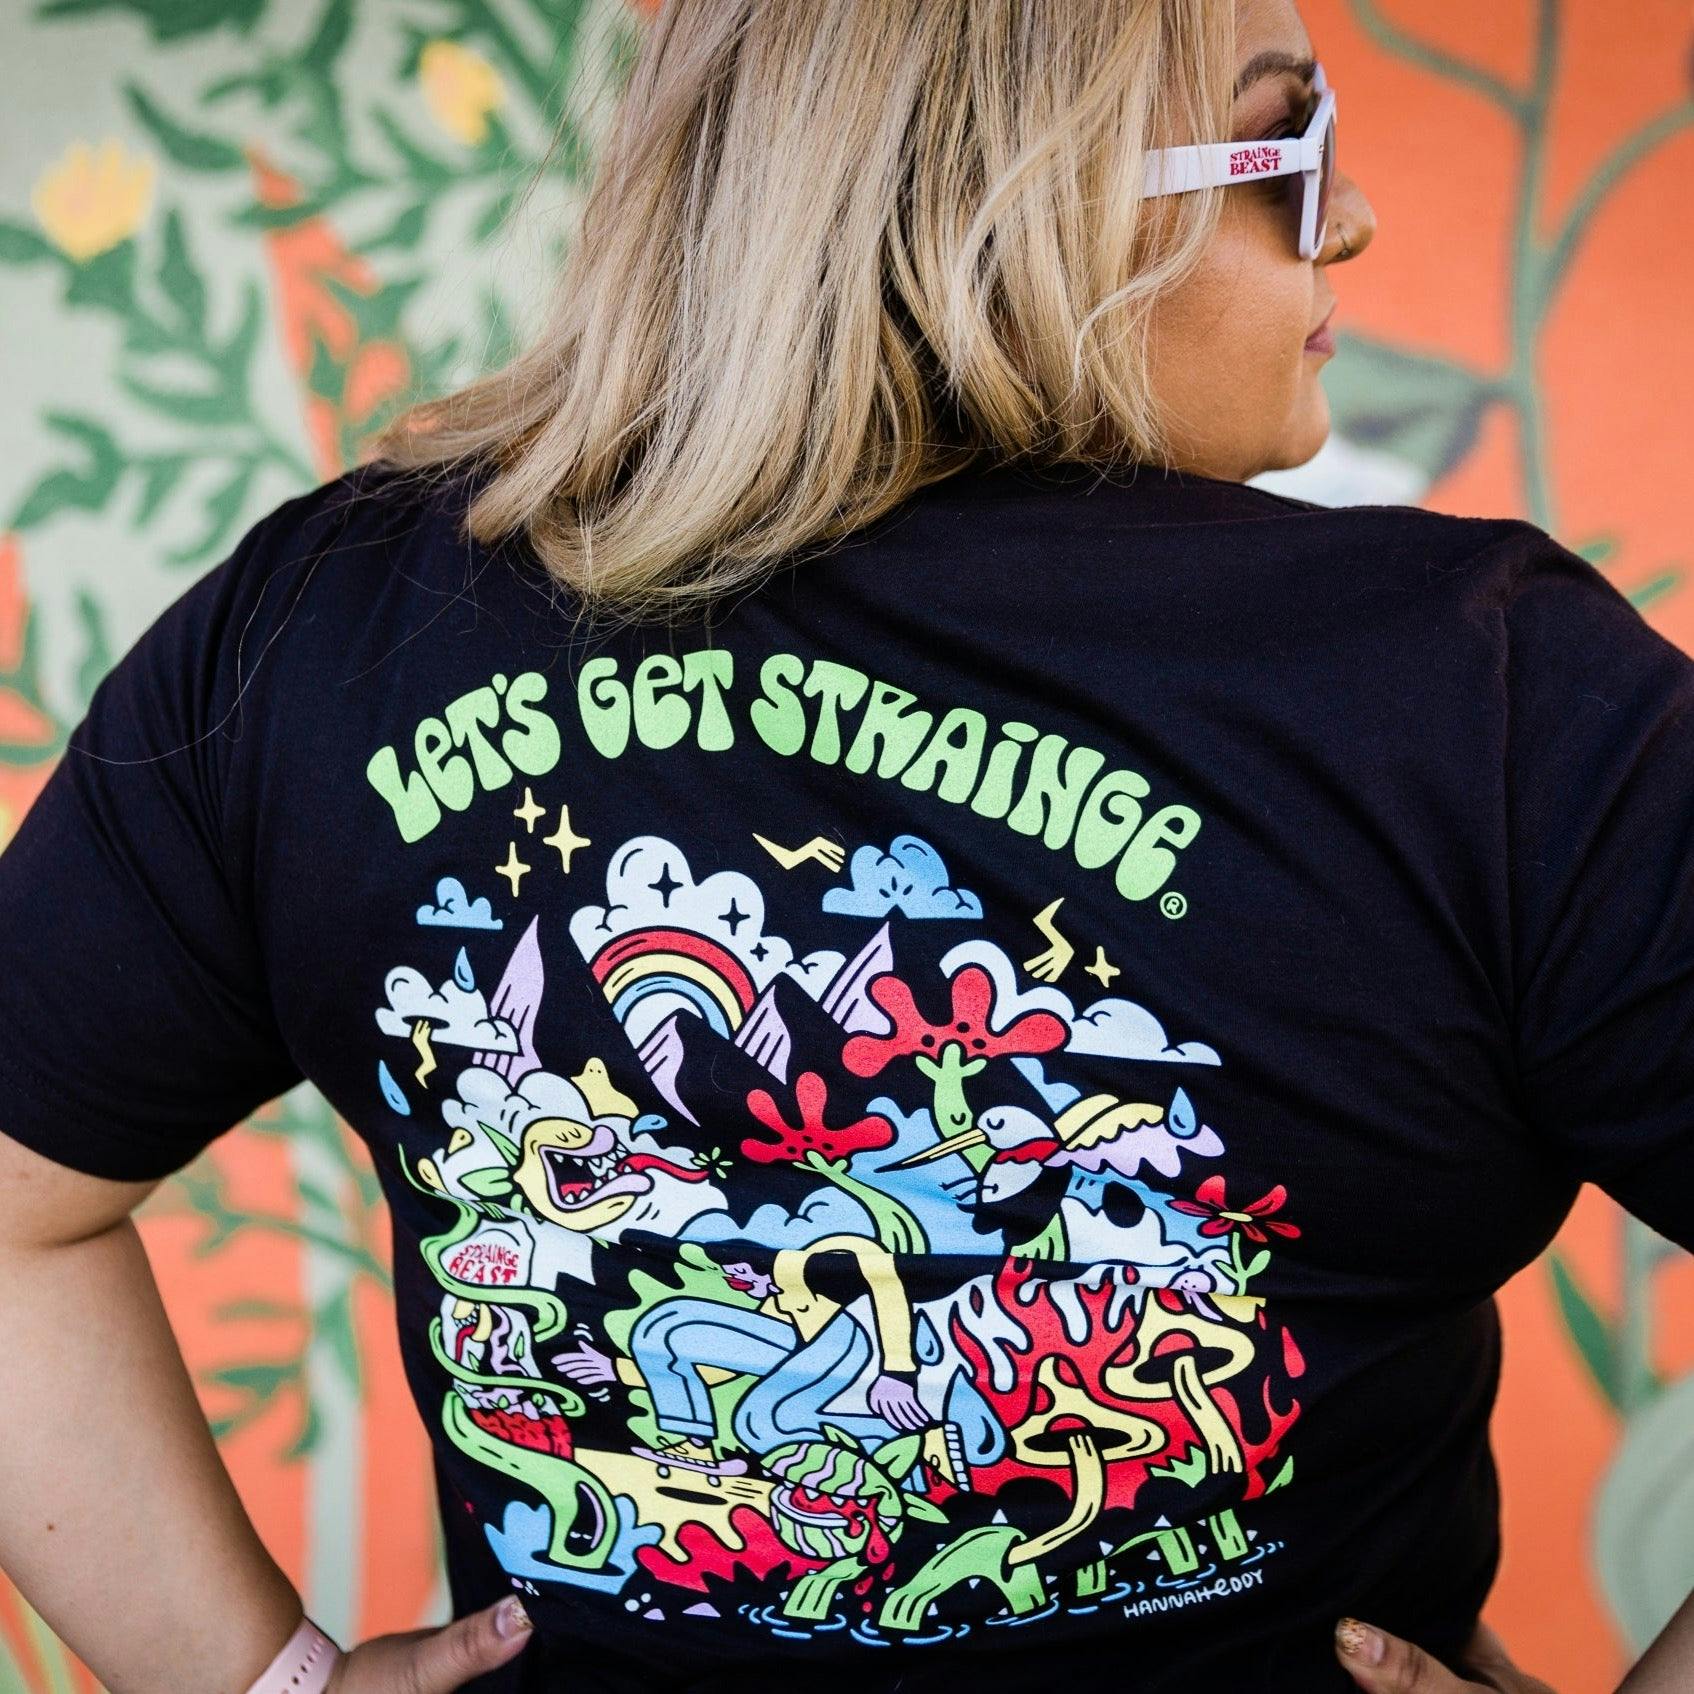 Sierra Nevada Brewing Co. Strainge Beast X Hannah Eddy T-Shirt worn by a woman displaying the back graphic